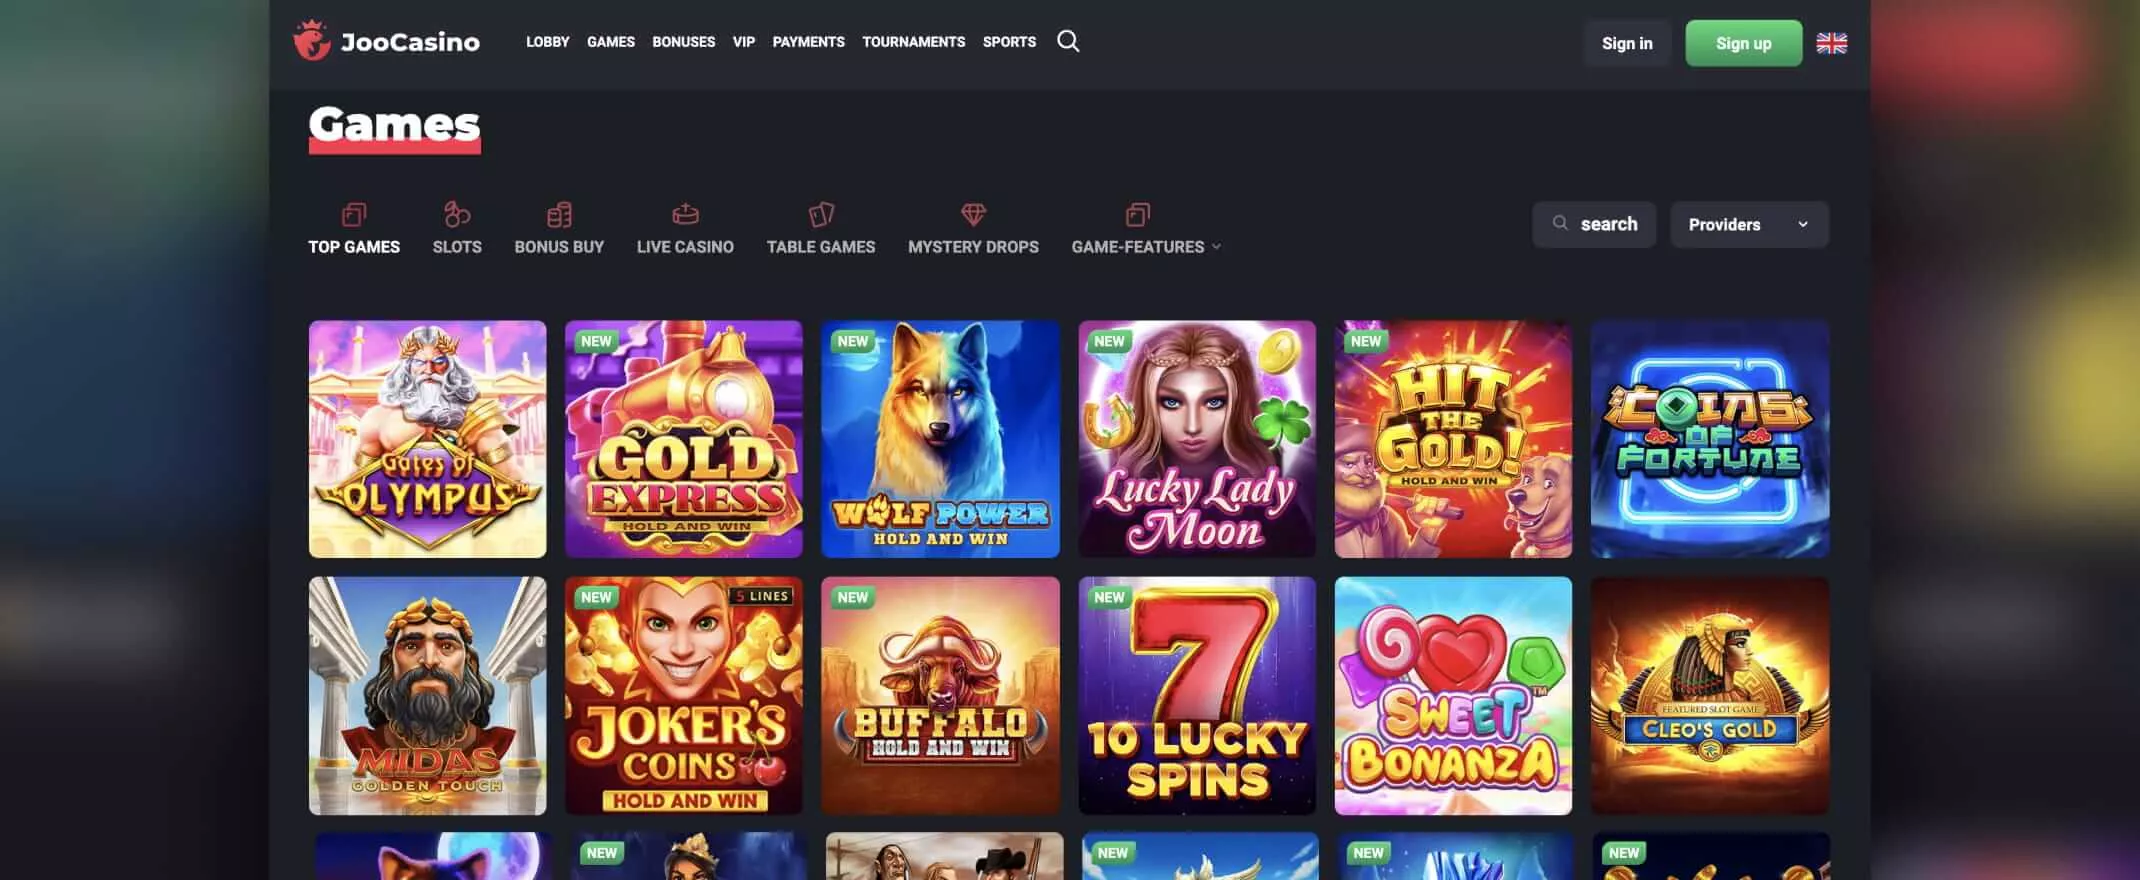 Joo casino screenshot of games